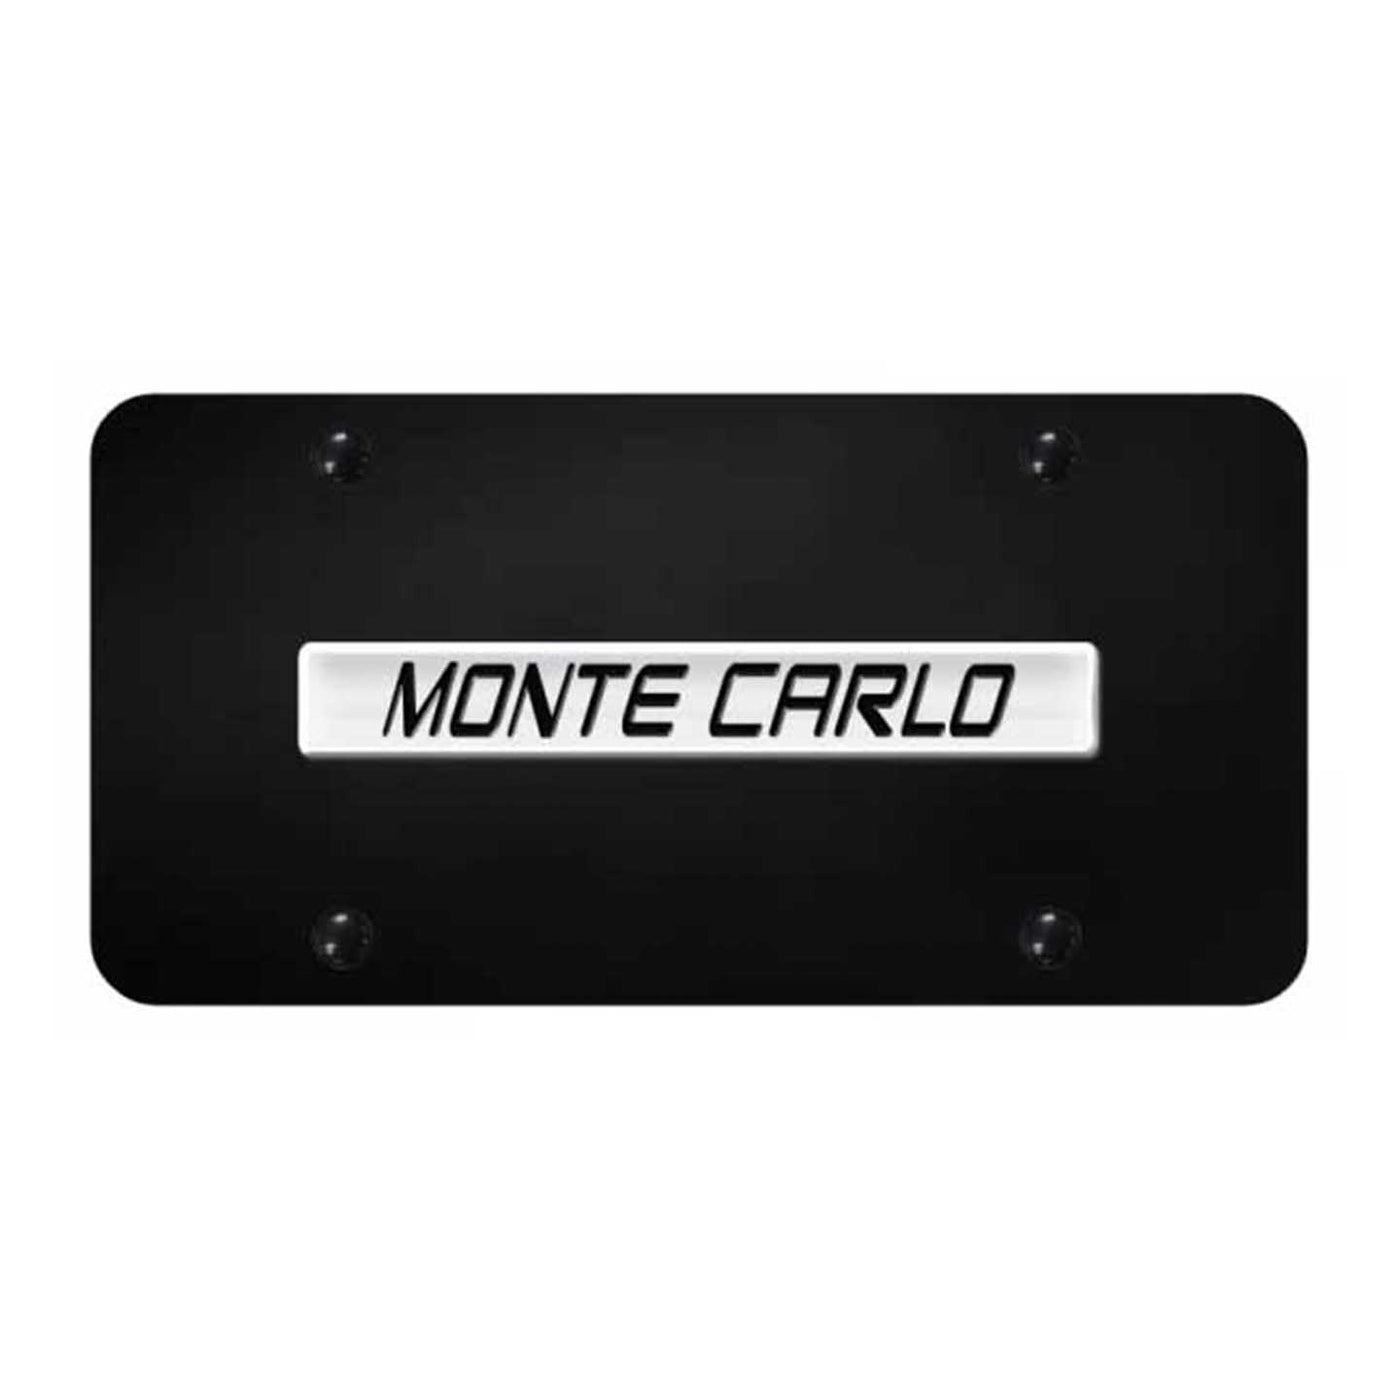 Monte Carlo Name License Plate - Chrome on Black